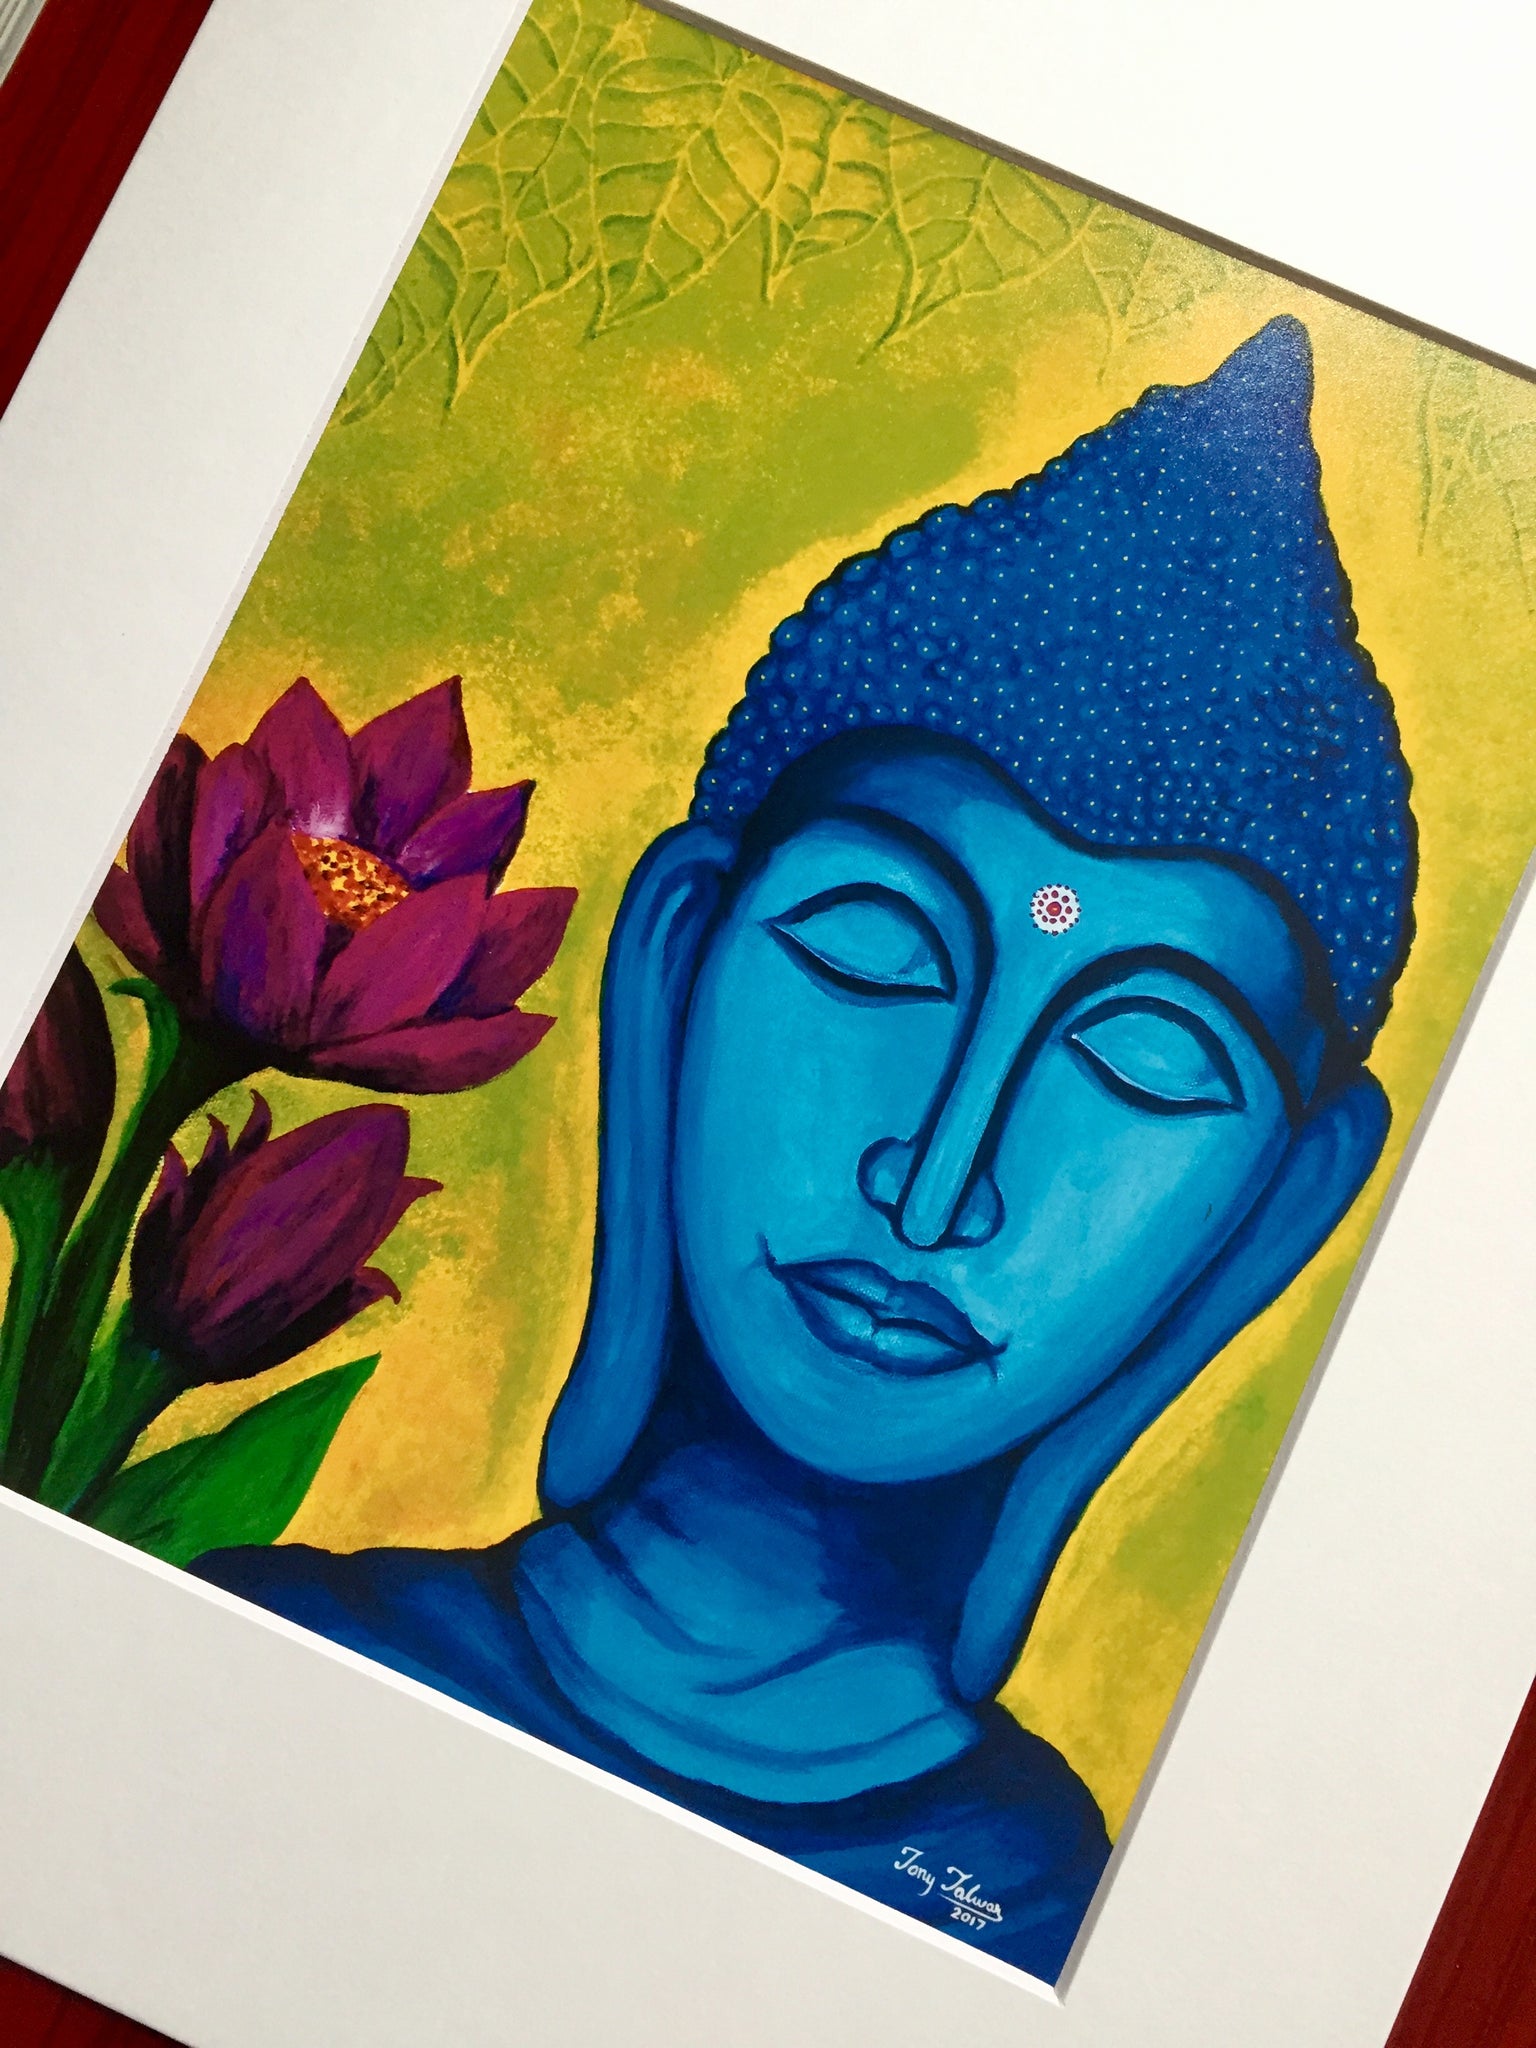 Buddha (Art Print) Artist: Tony Talwar | FREE SHIPPING